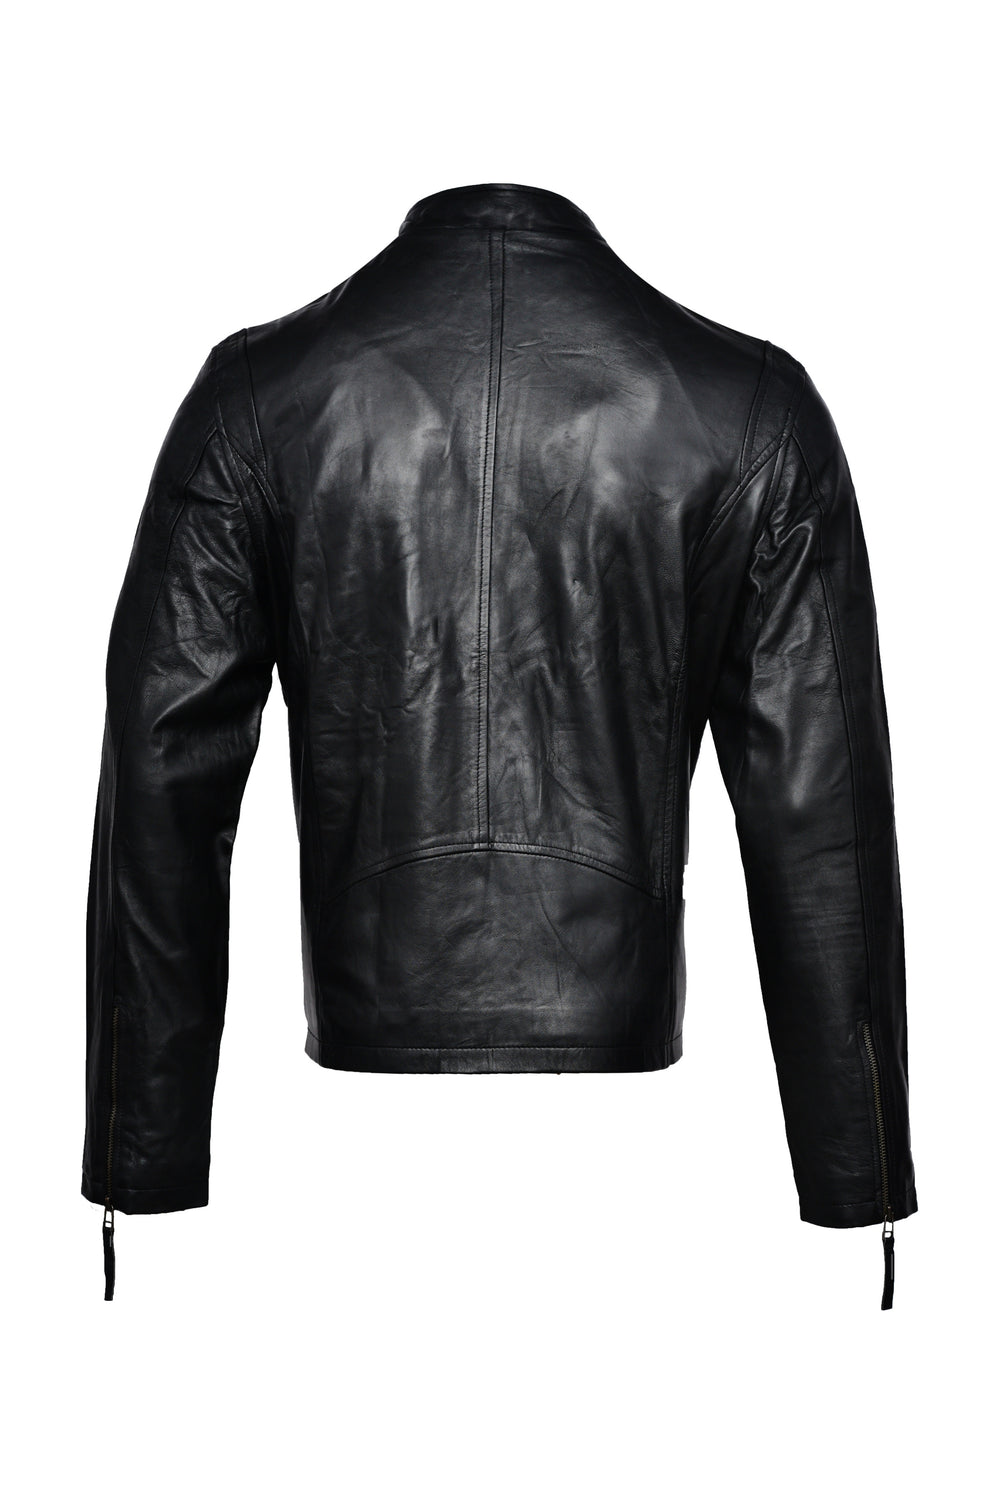 Hemsworth Black leather bomber jackets for men